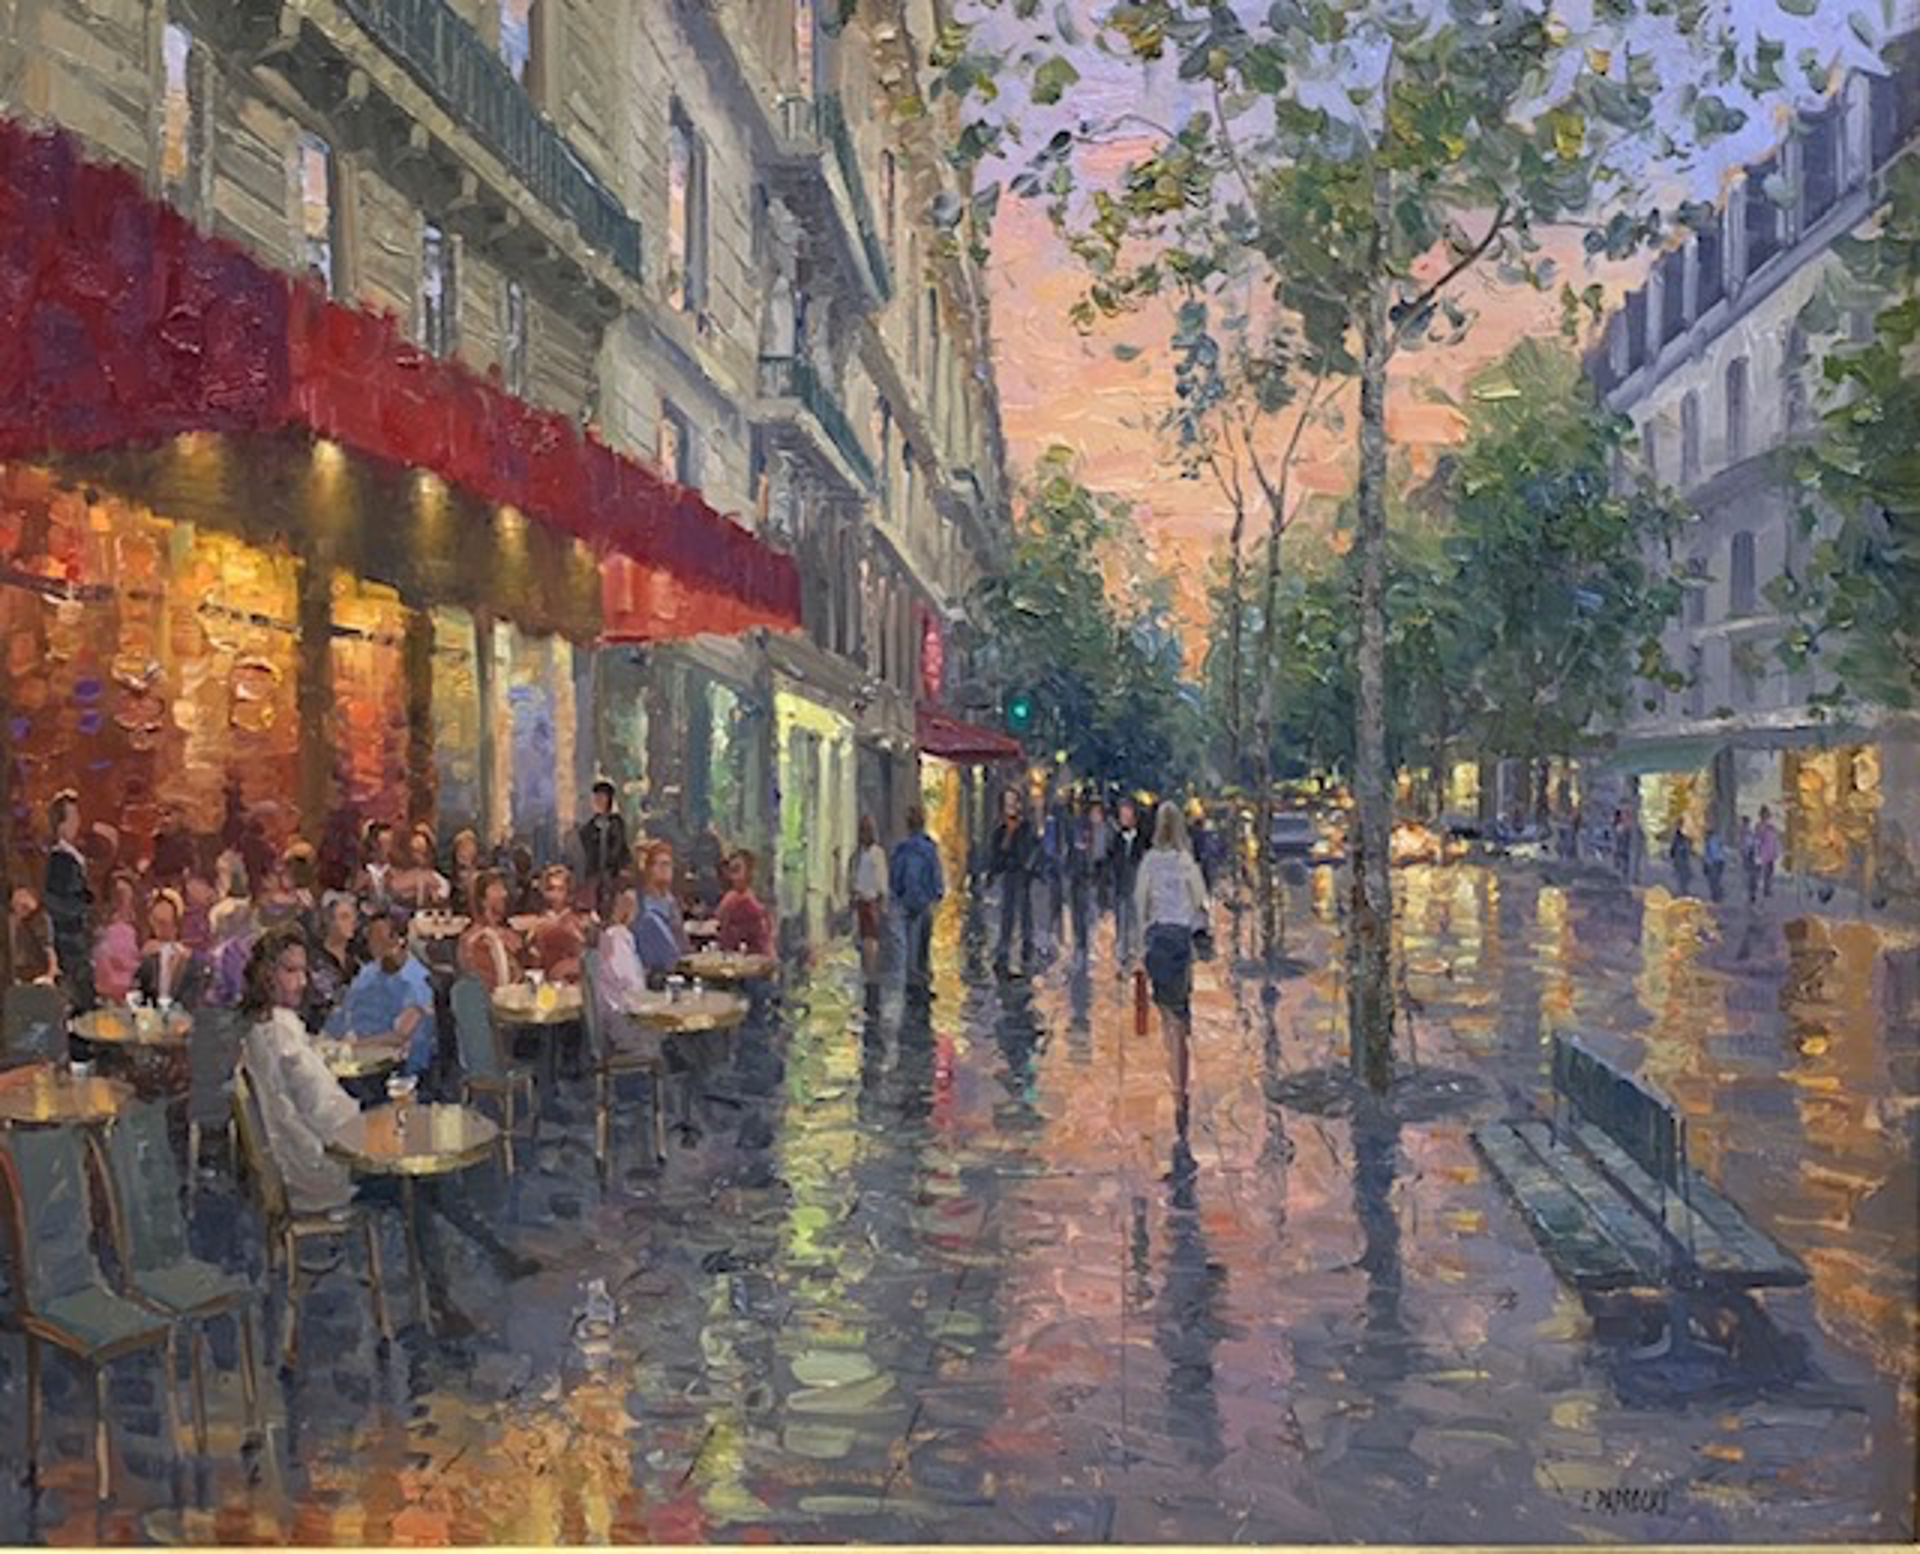 Parisian Cafe by EJ Paprocki